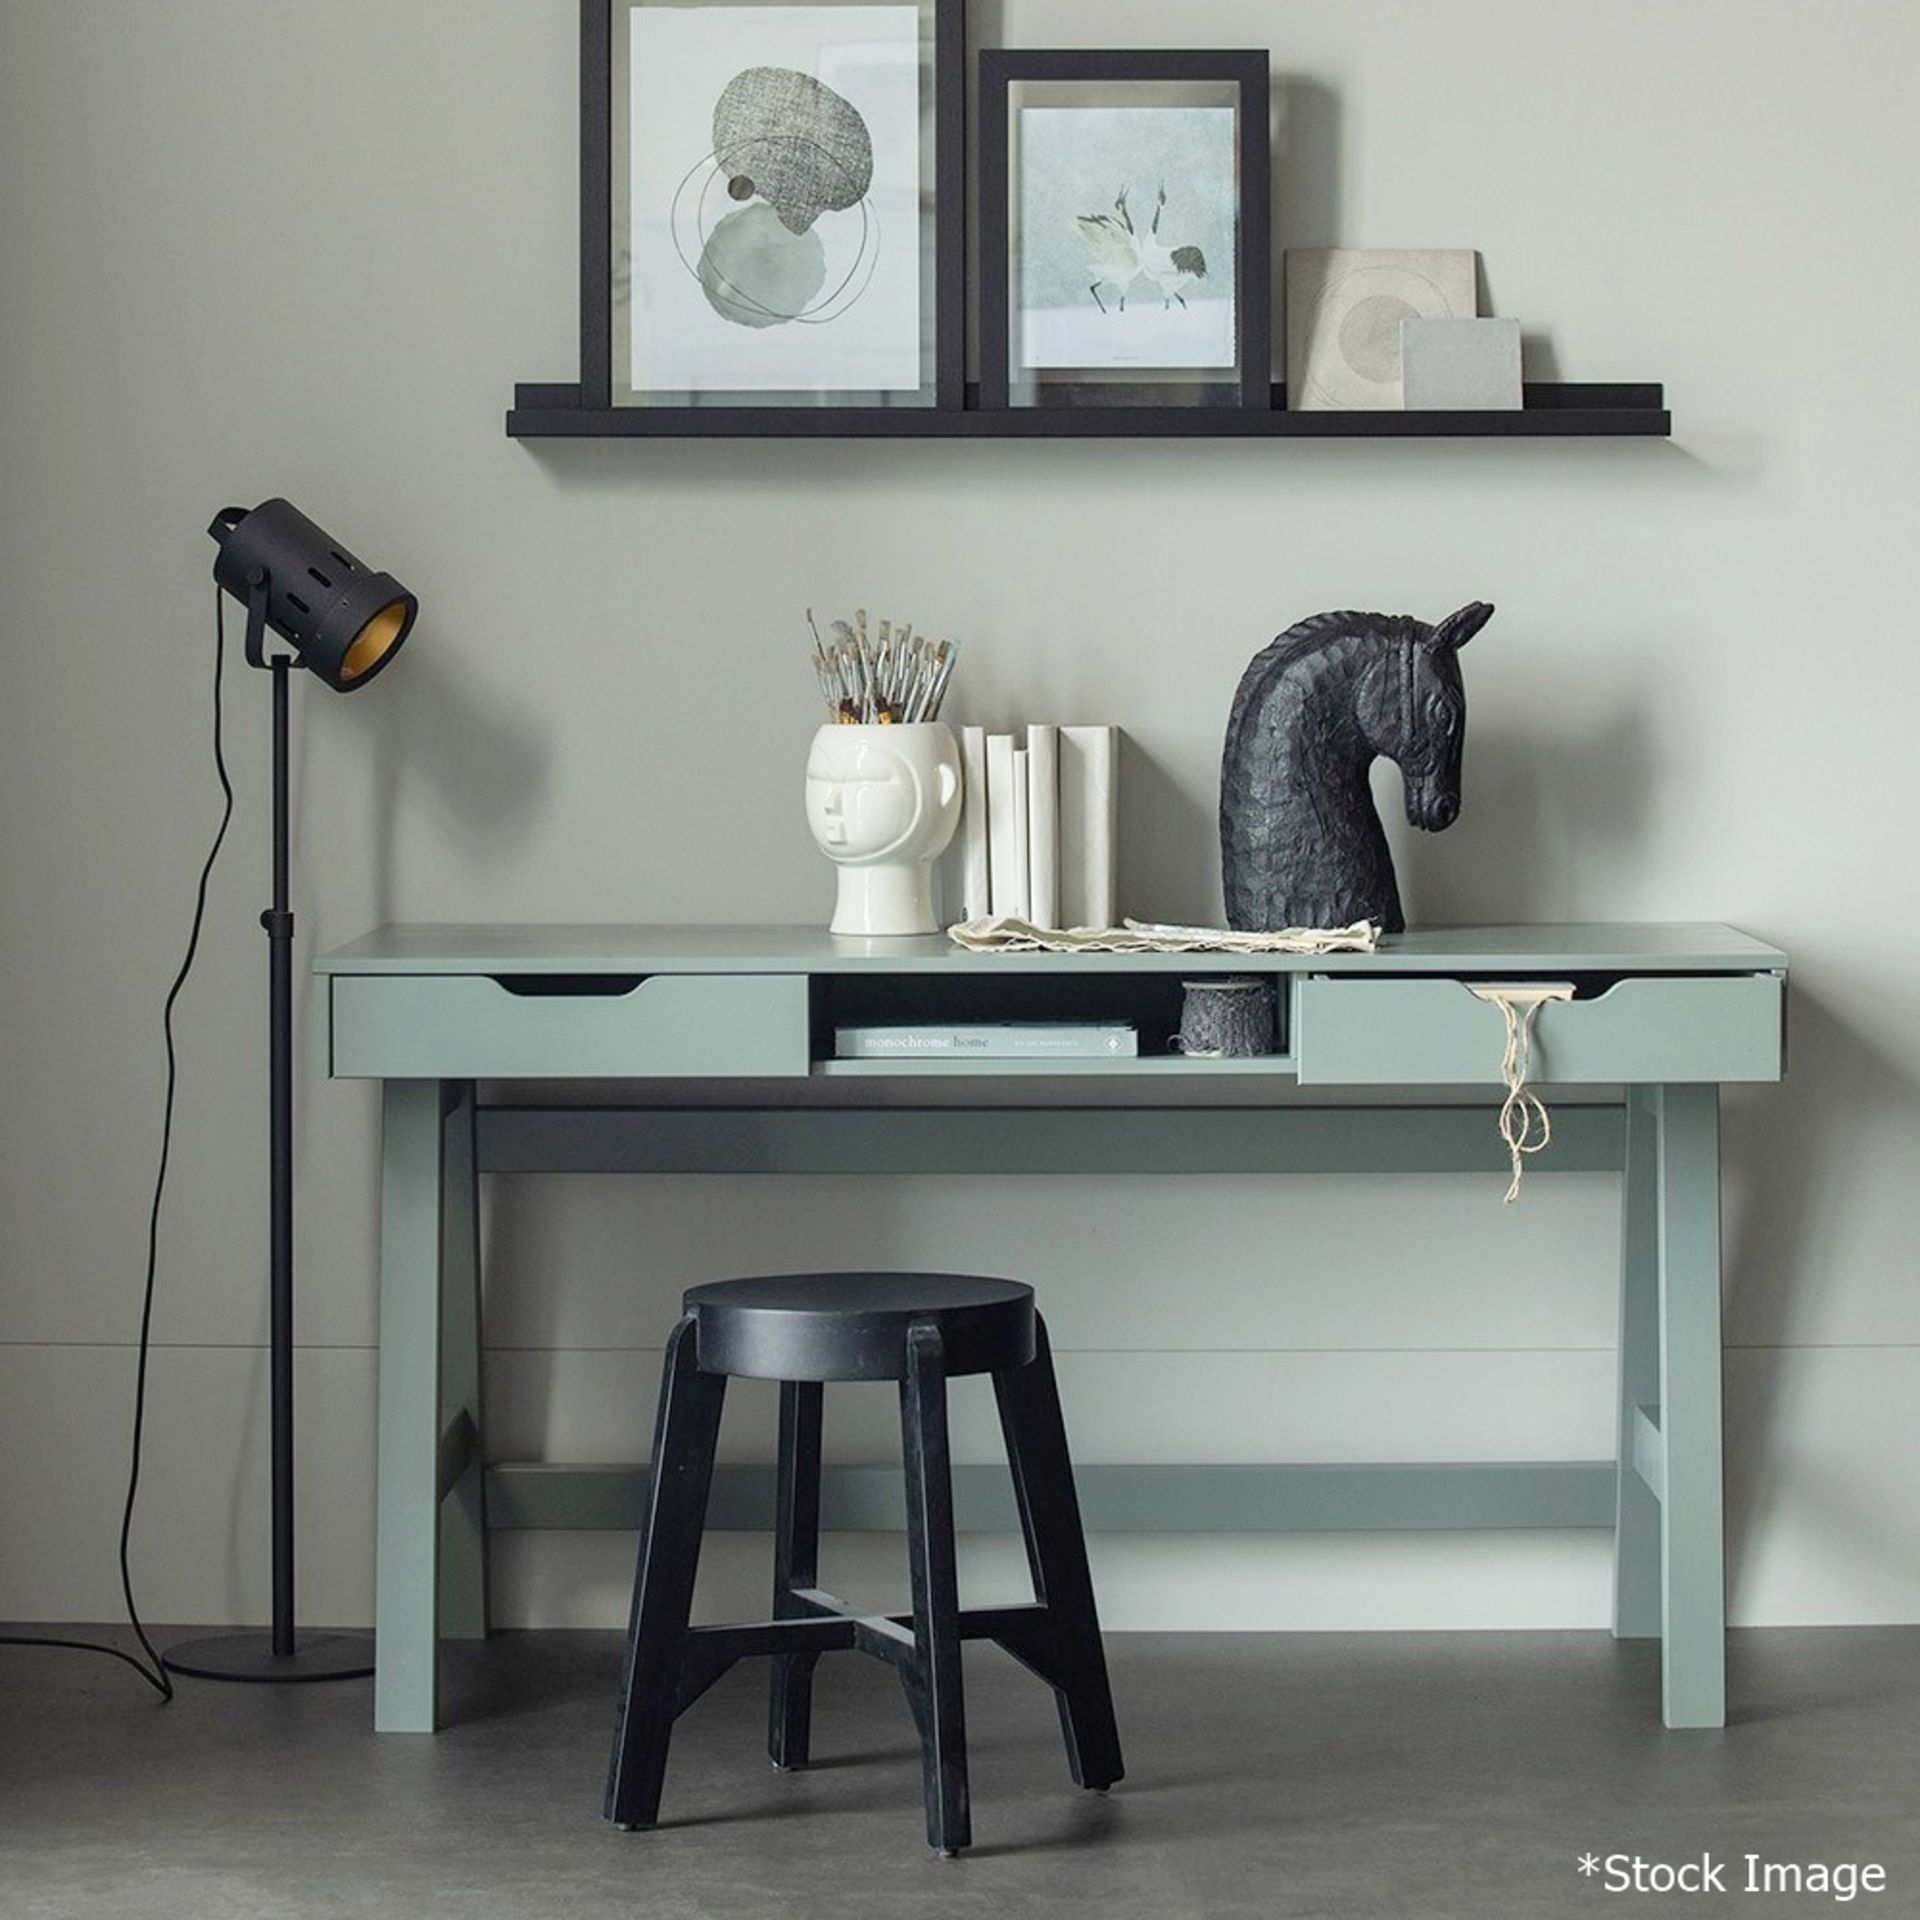 1 x WOOOD 'Nikki' Desk In Pale Sage Green - Original Price £385.00 - Made In Holland - Sealed